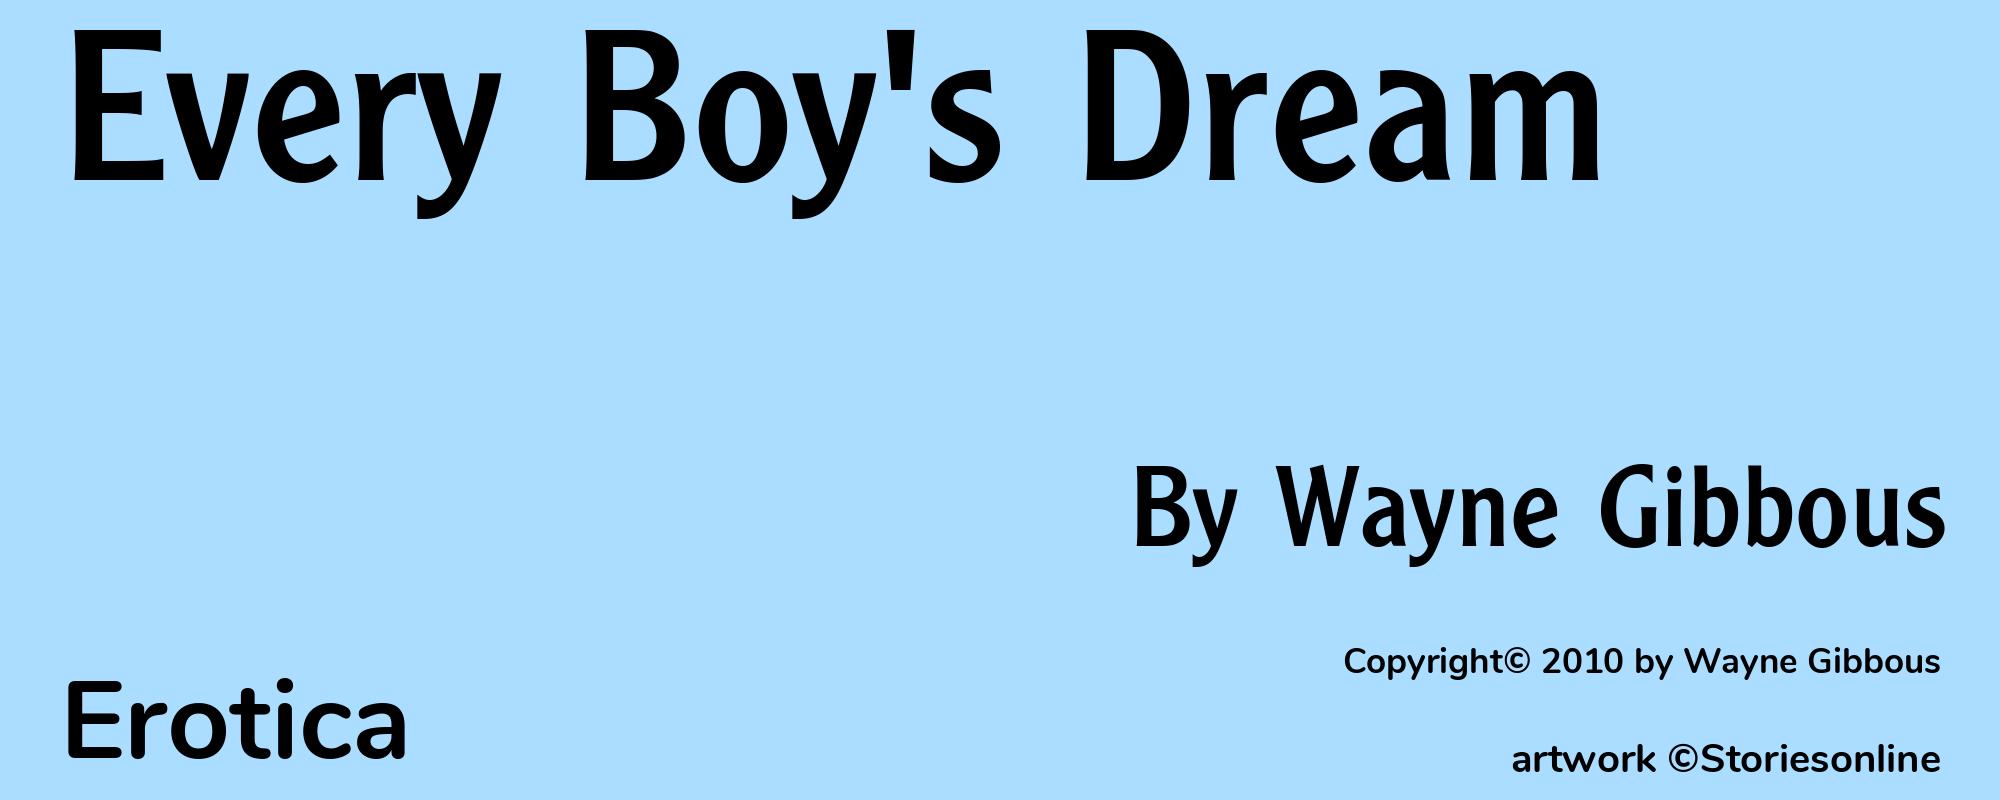 Every Boy's Dream - Cover